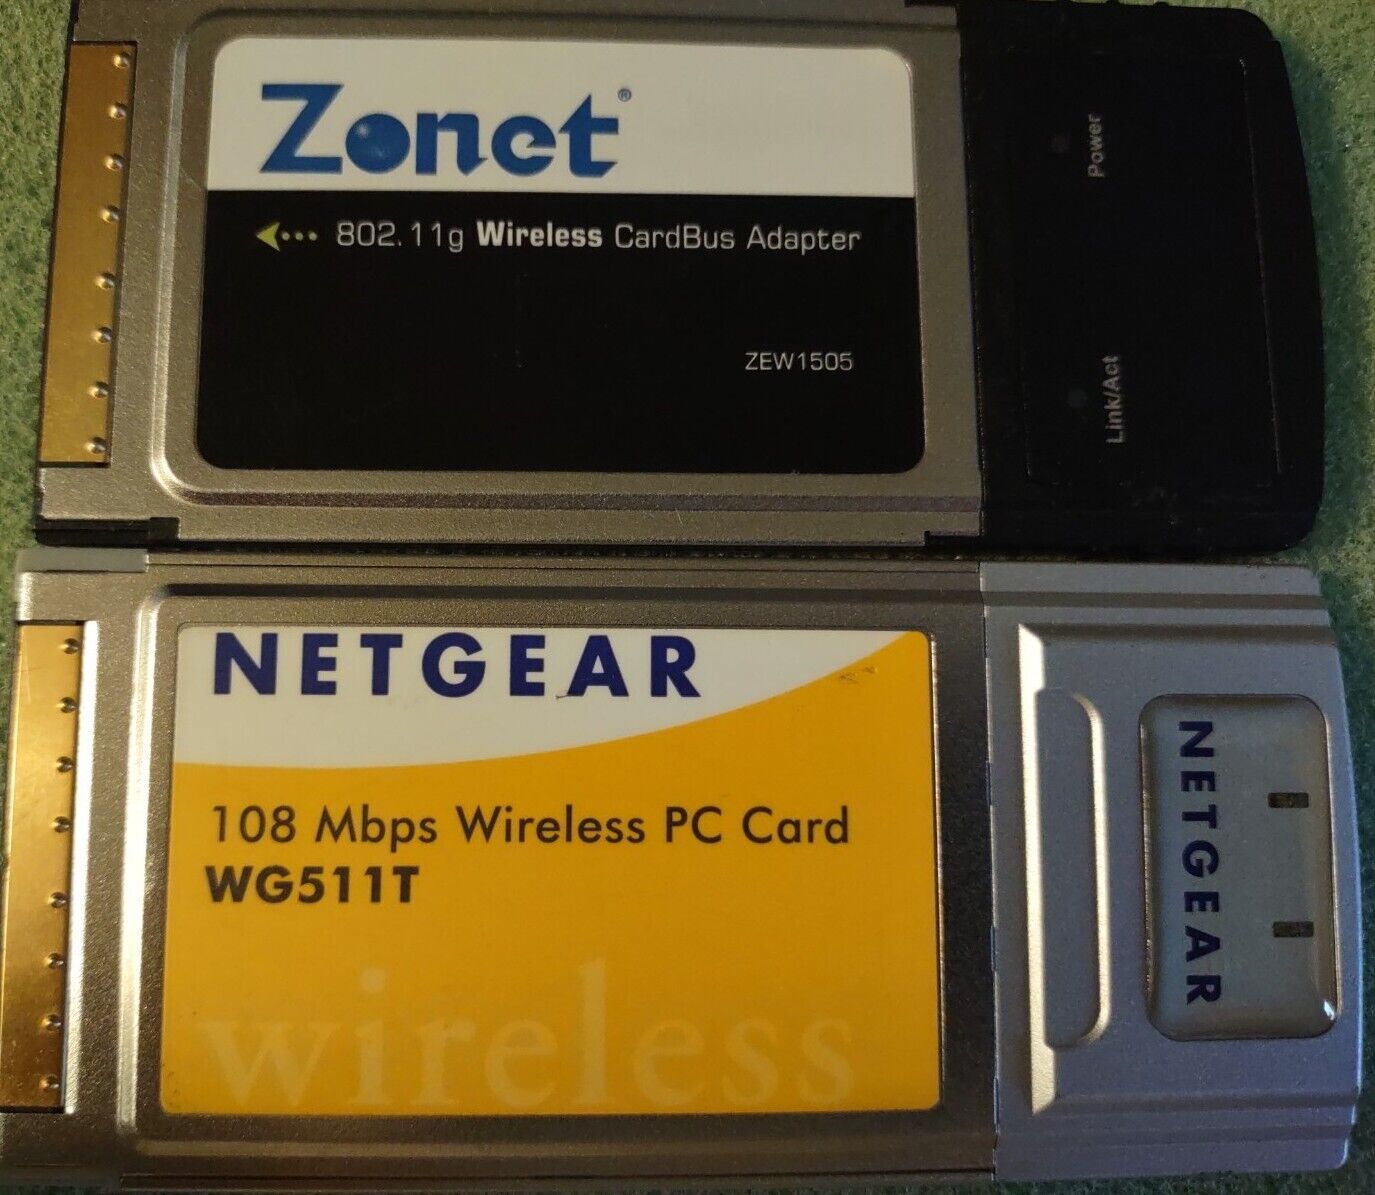 Netgear WG511T 108 Mbps, Zonet ZEW1505 54 Mbps CardBus Wireless PC Card Adapter